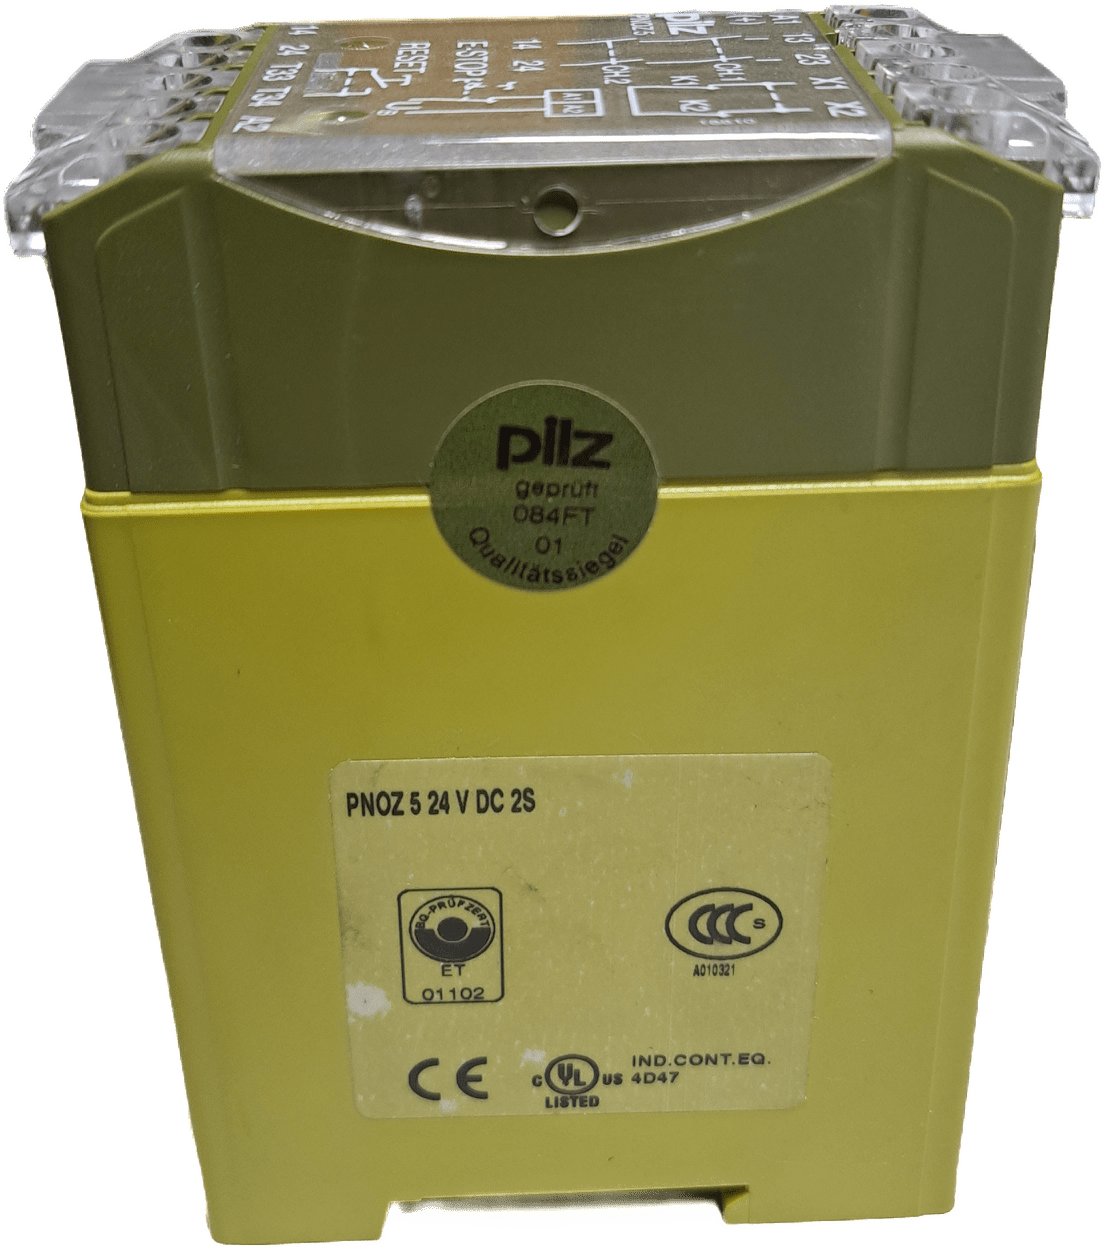 Pilz 474590 Sicherheitsschaltgerät PNOZ 5 24VDC 2S - #product_category# | Klenk Maschinenhandel